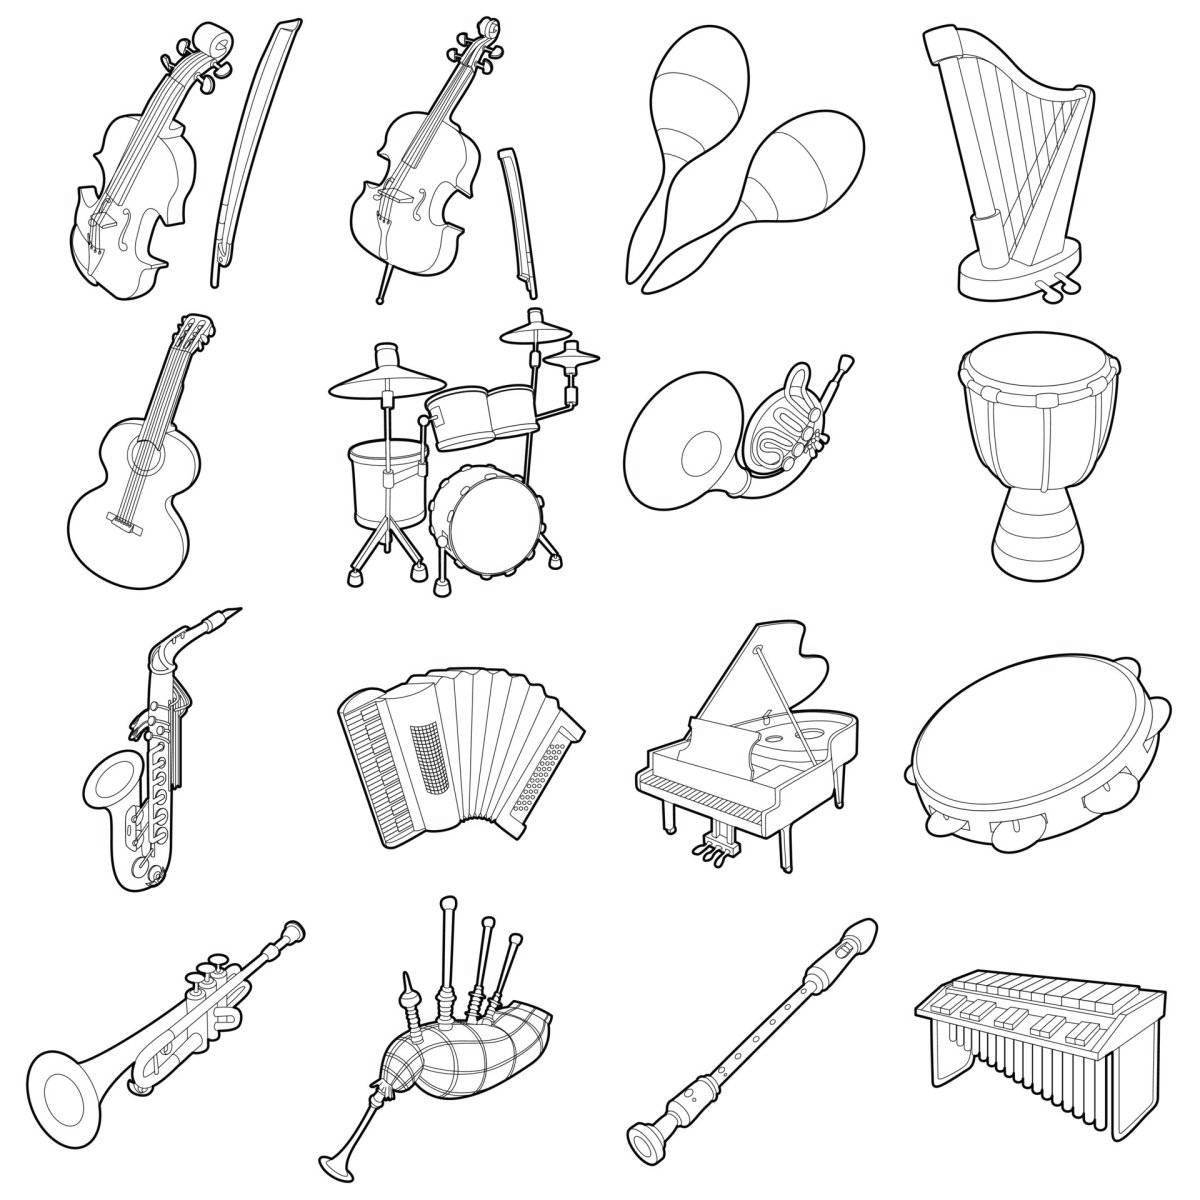 Complex Russian folk musical instruments